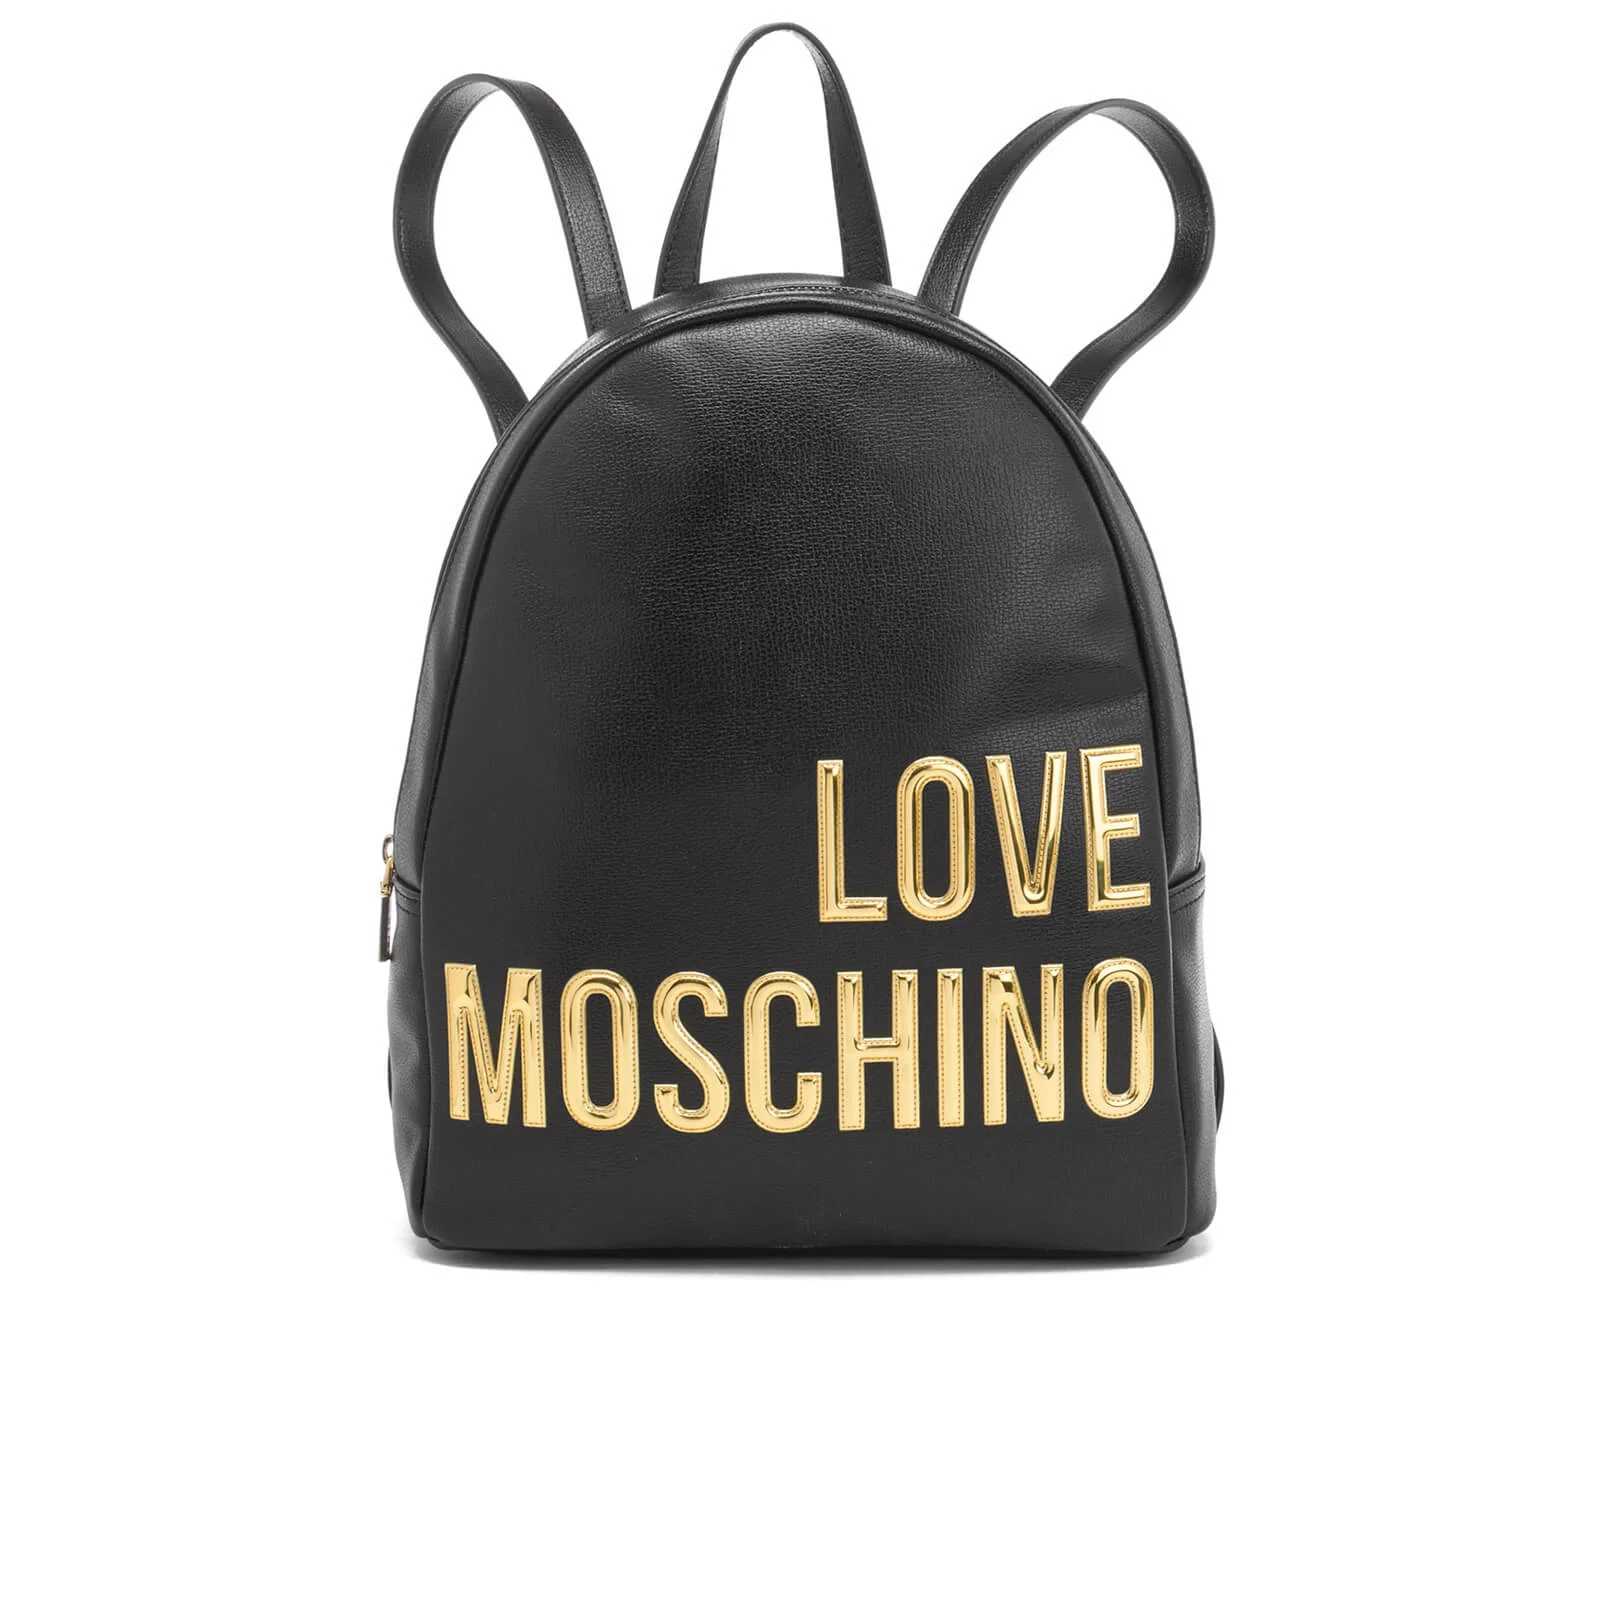 Love Moschino Women's Logo Backpack - Black Image 1